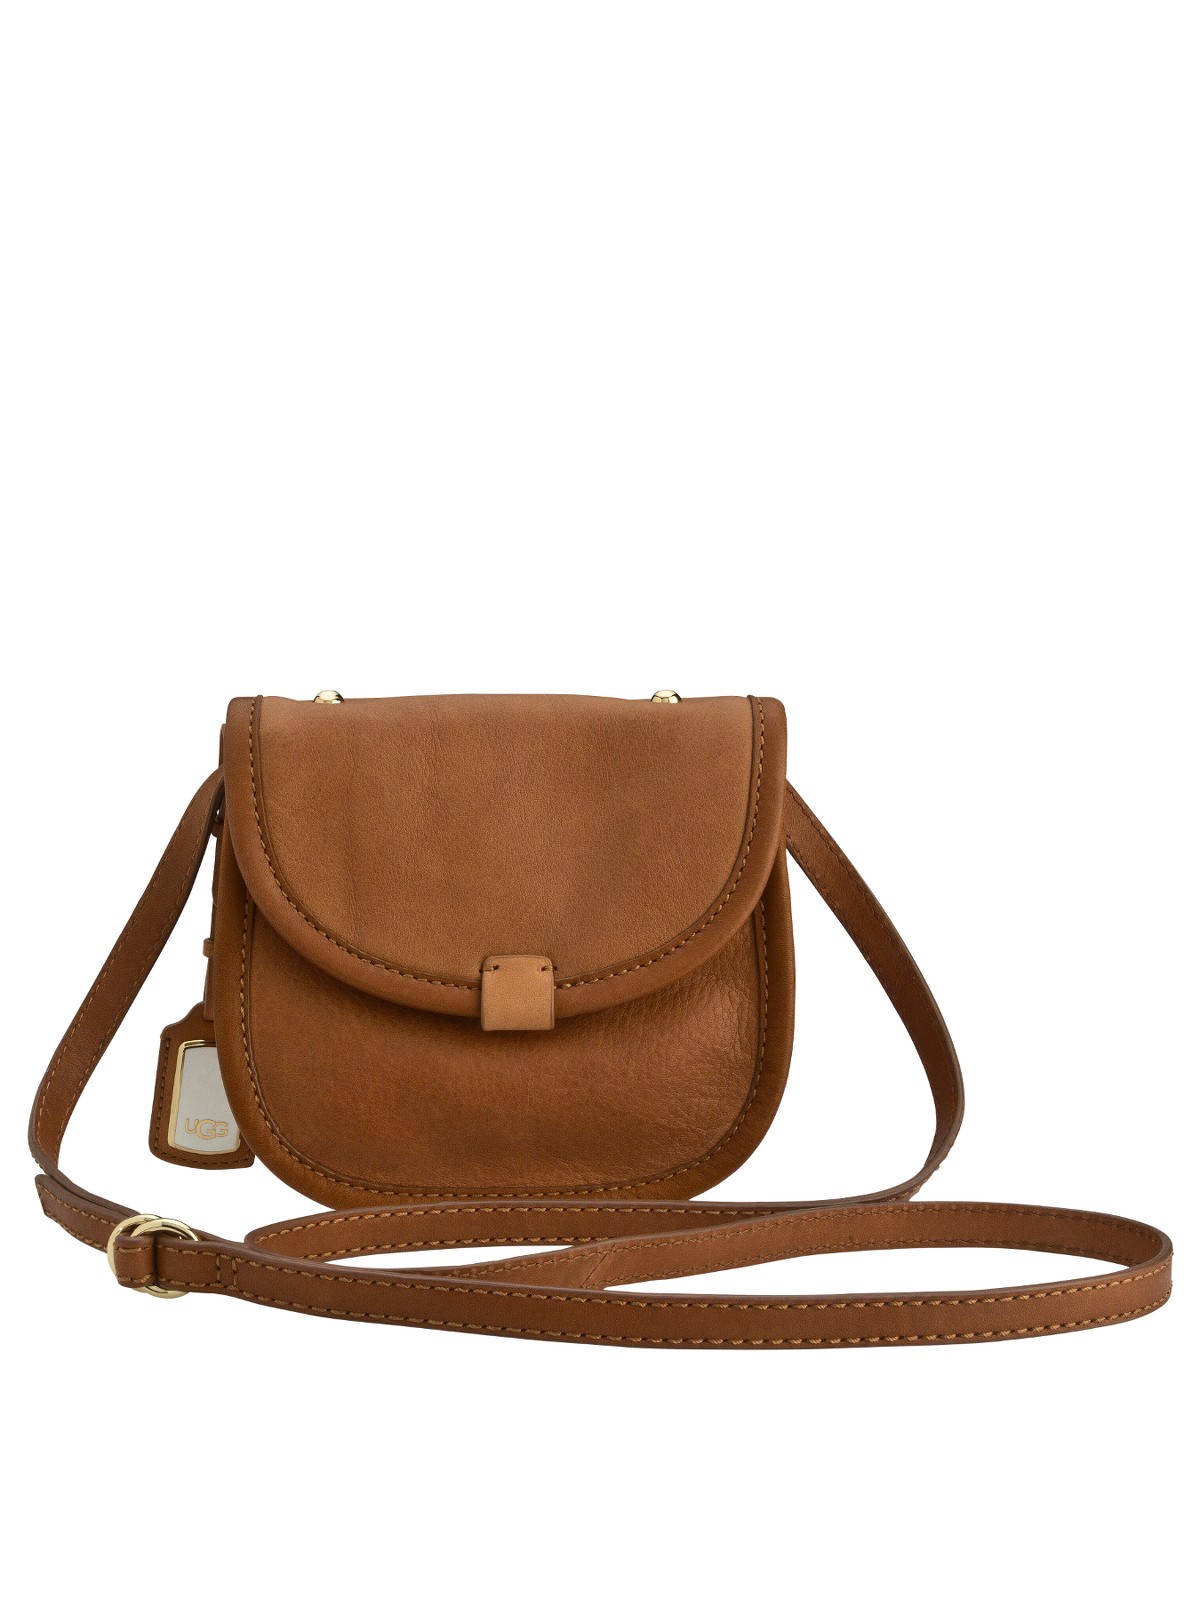 Ugg Ugg Australia Classic Mini Crossbody Bag in Brown (caramel) | Lyst